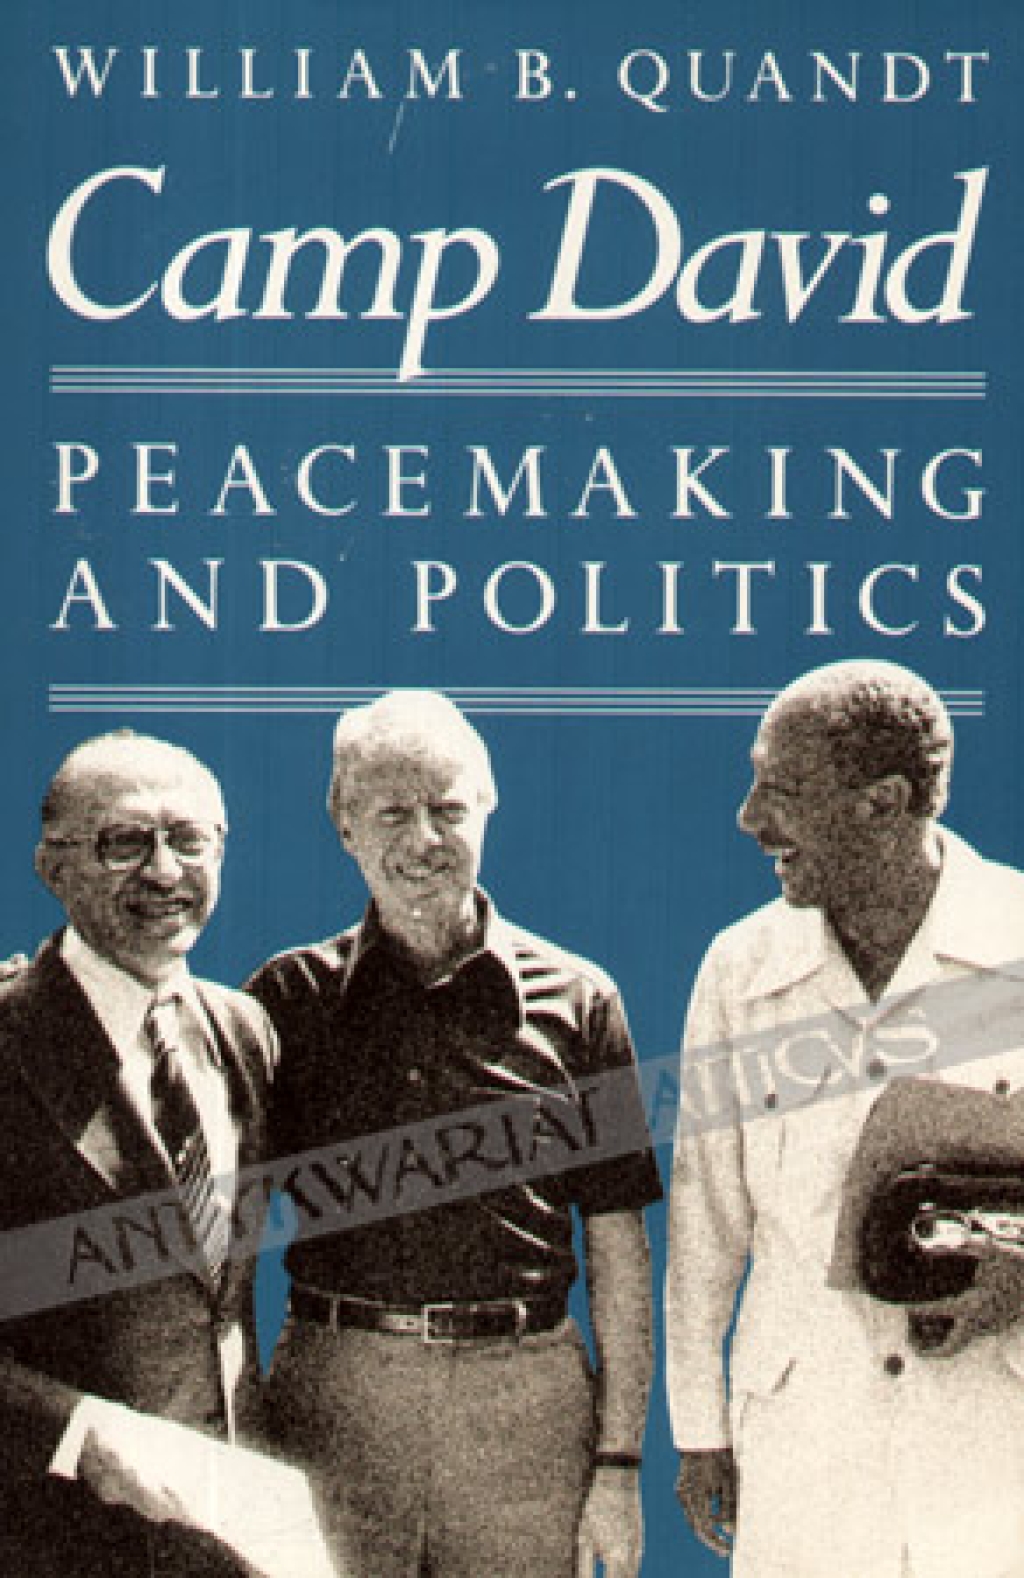 Camp David. Peacemaking and politics